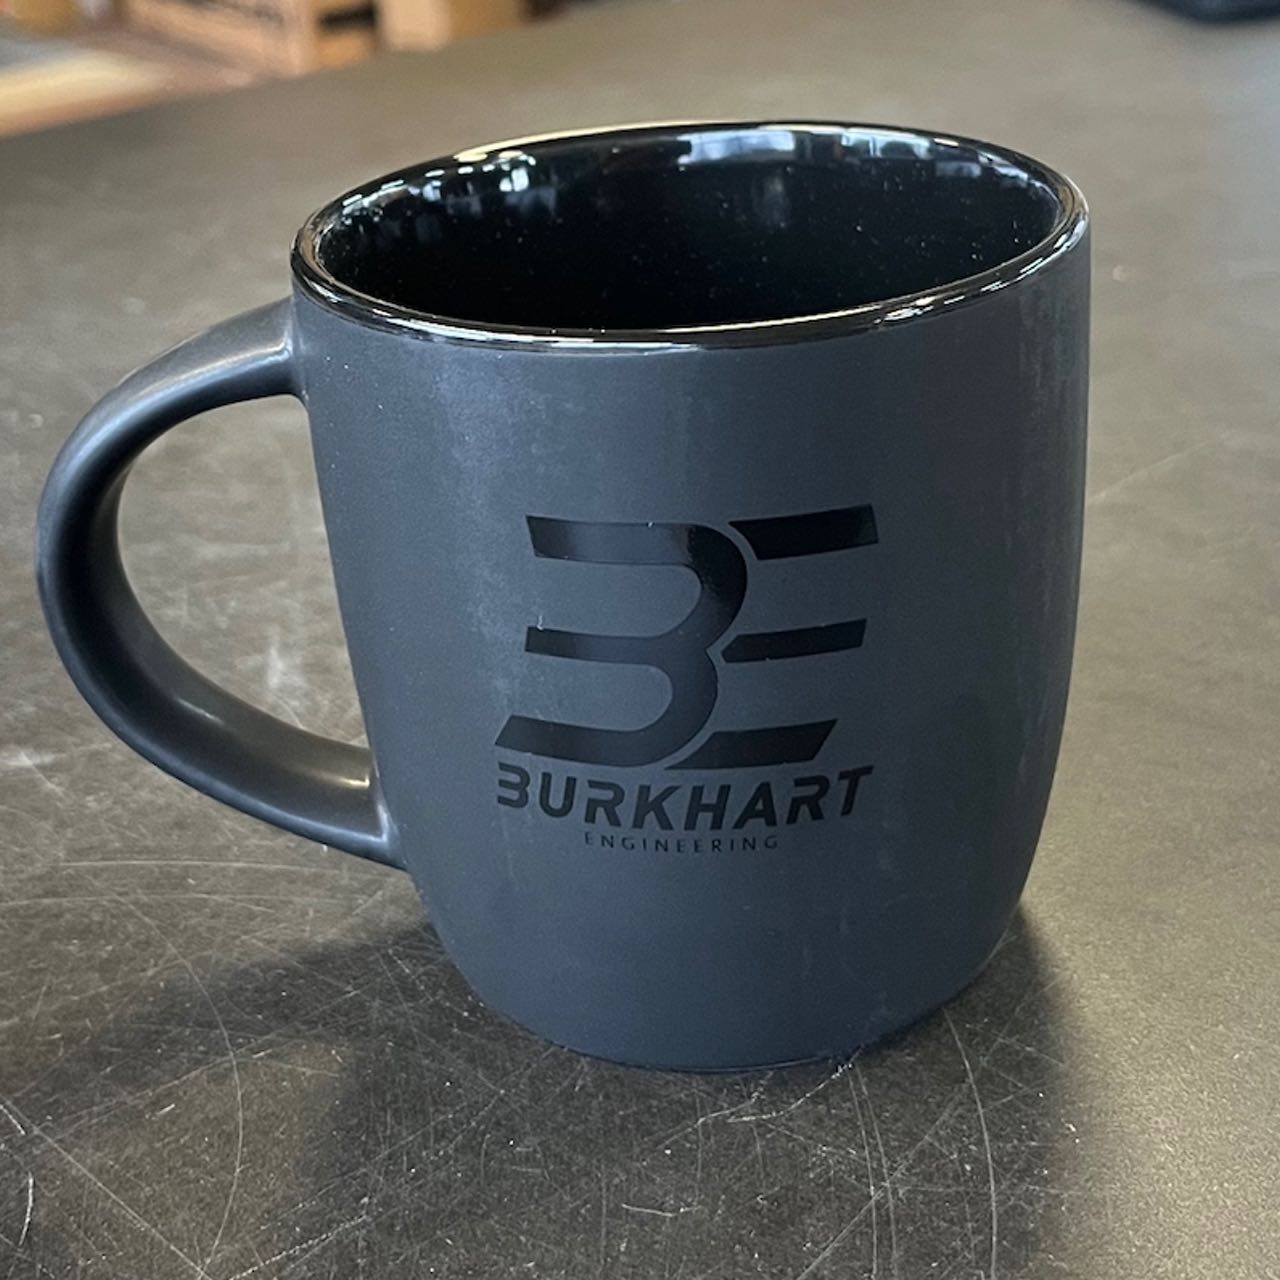 Burkhart Engineering Tasse schwarz » Burkhart Engineering